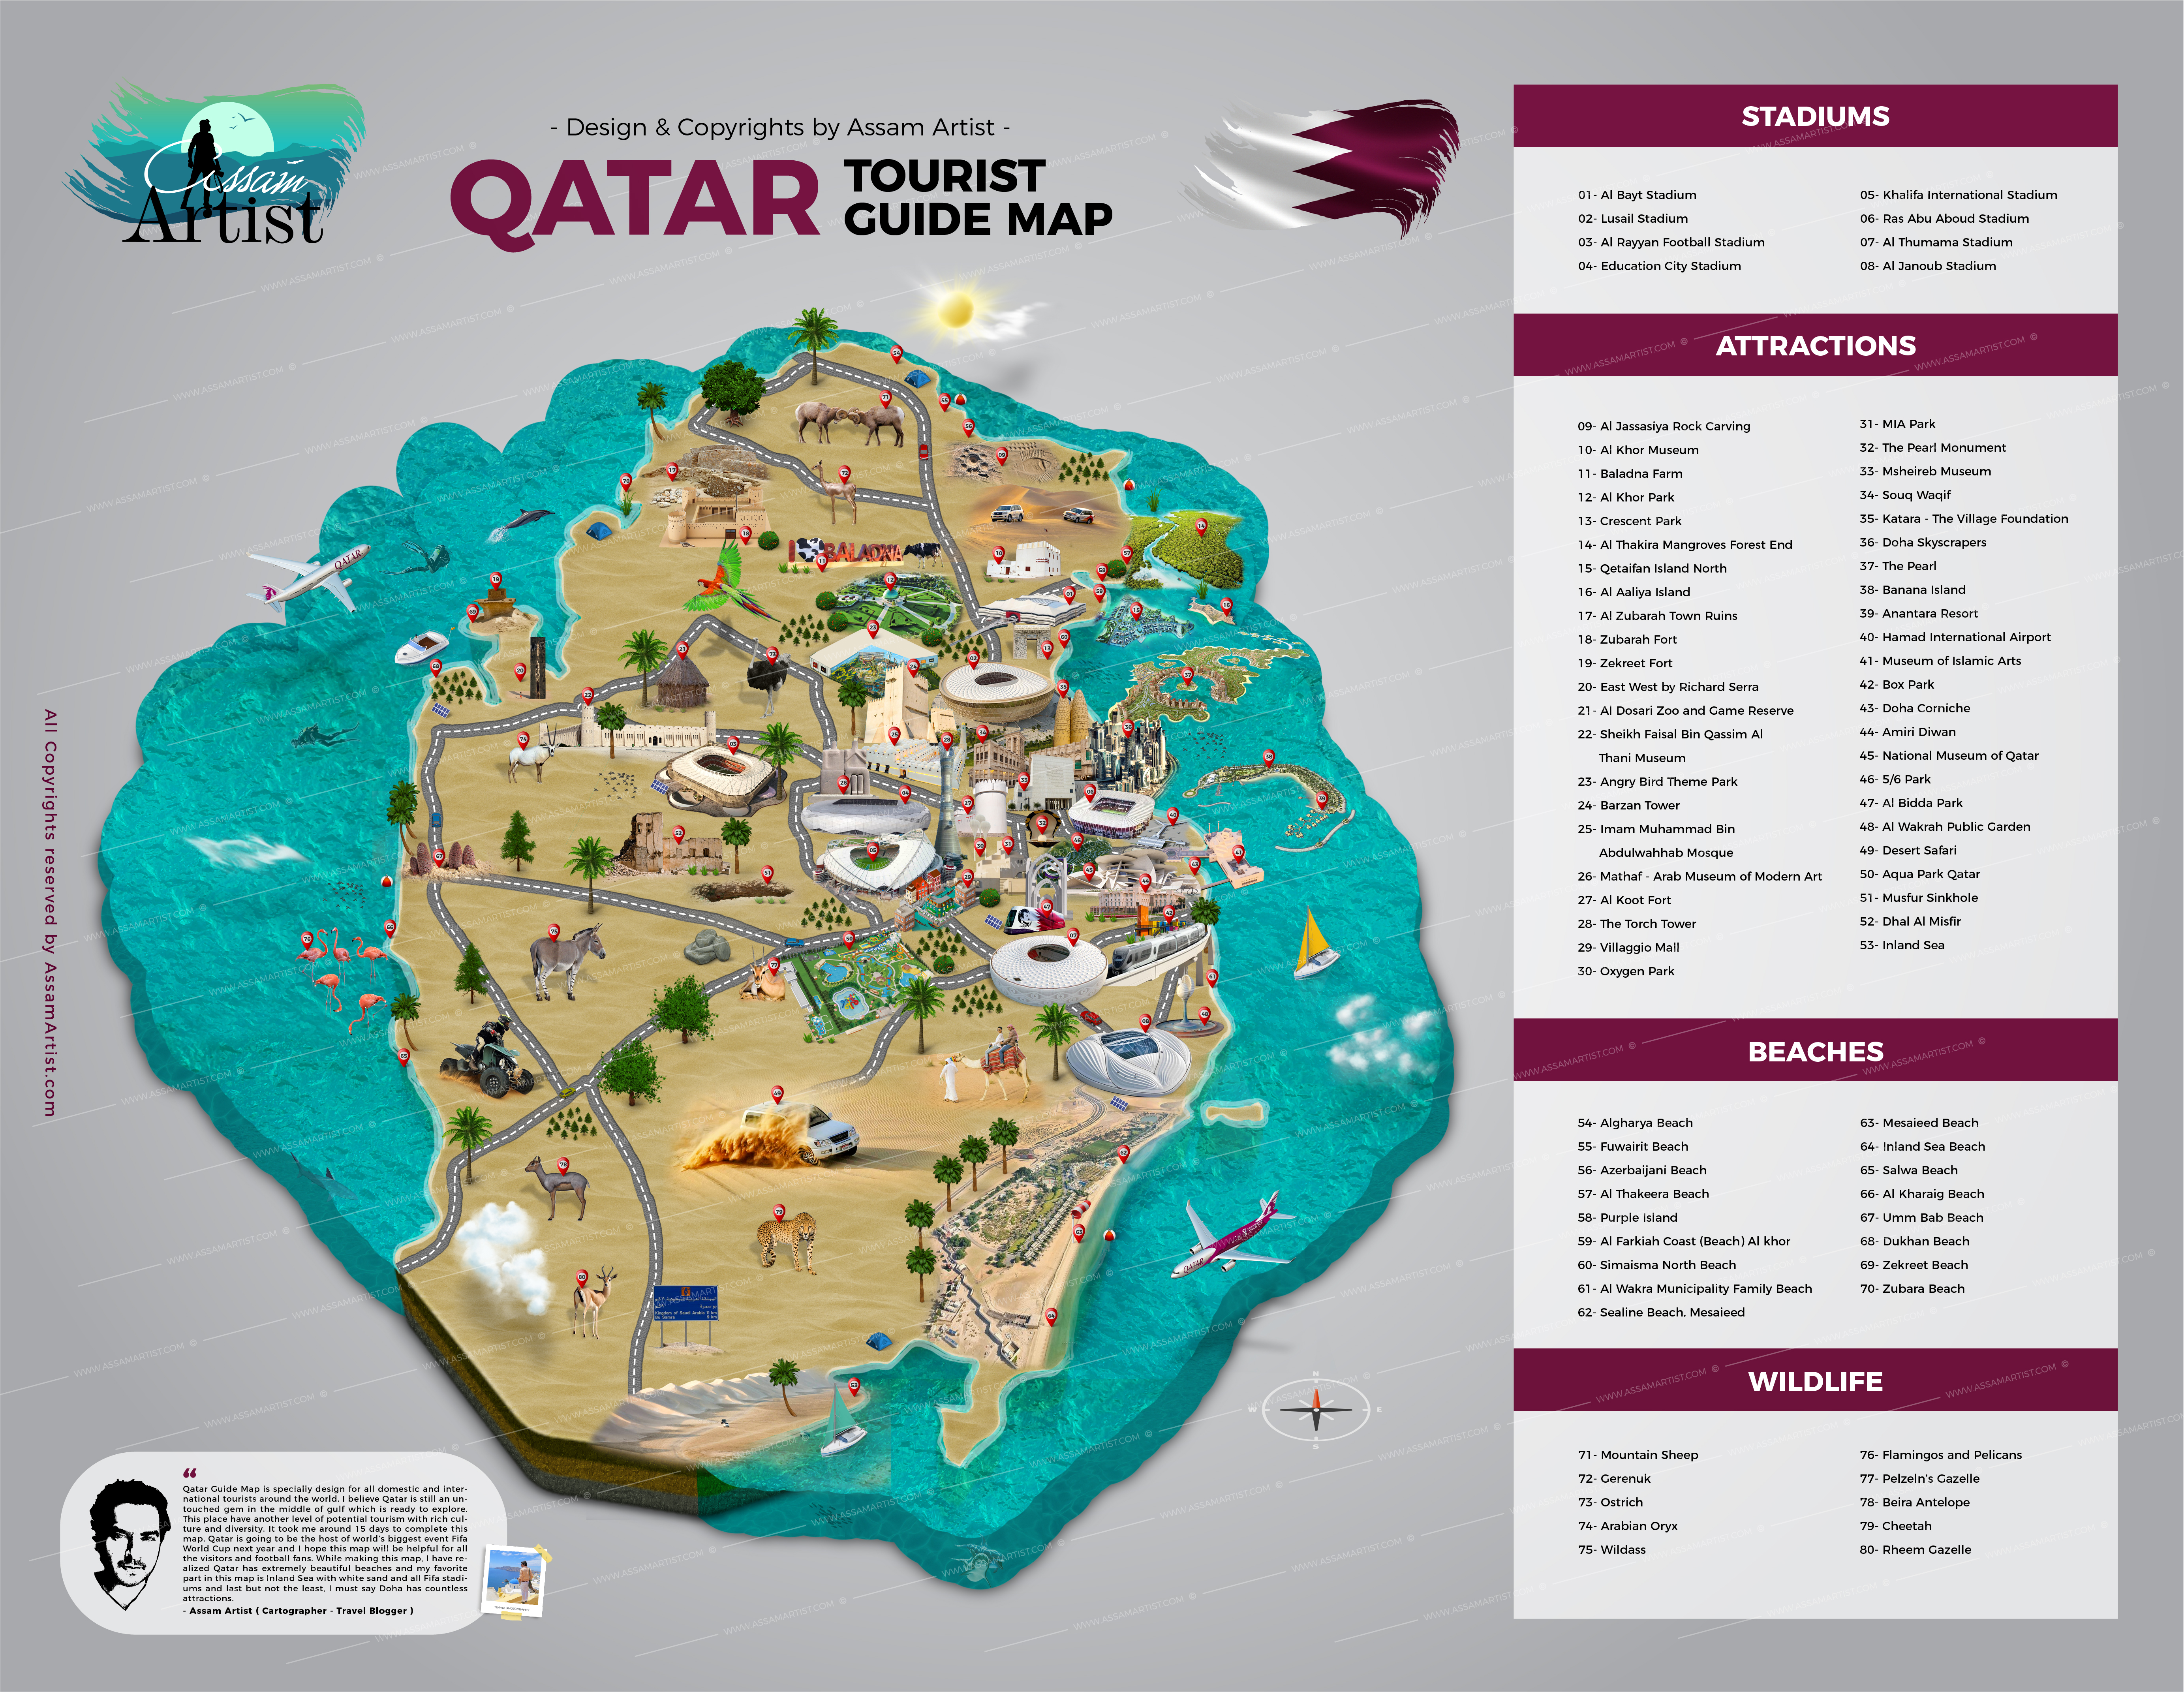 Qatar First Tourist Guide Map High Resolution Map by Assam Altaf